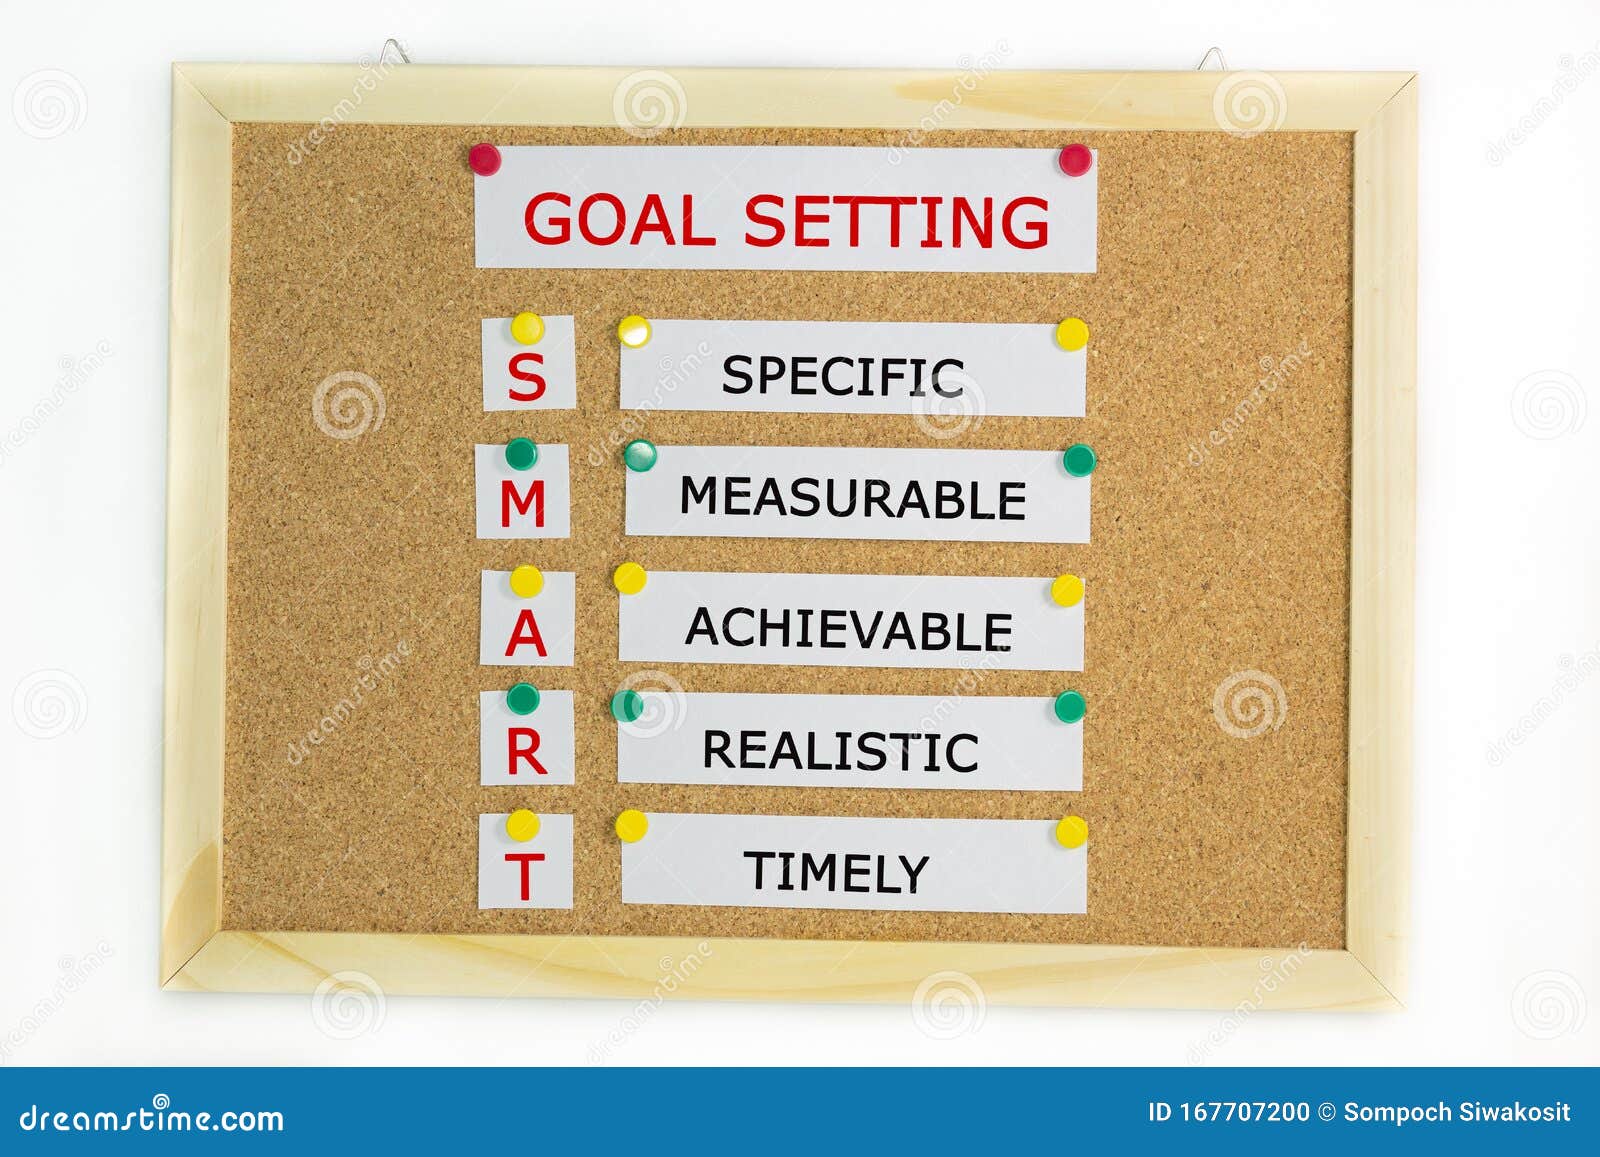 Smart Goal Setting Idea on a Pin Board Stock Photo - Image of